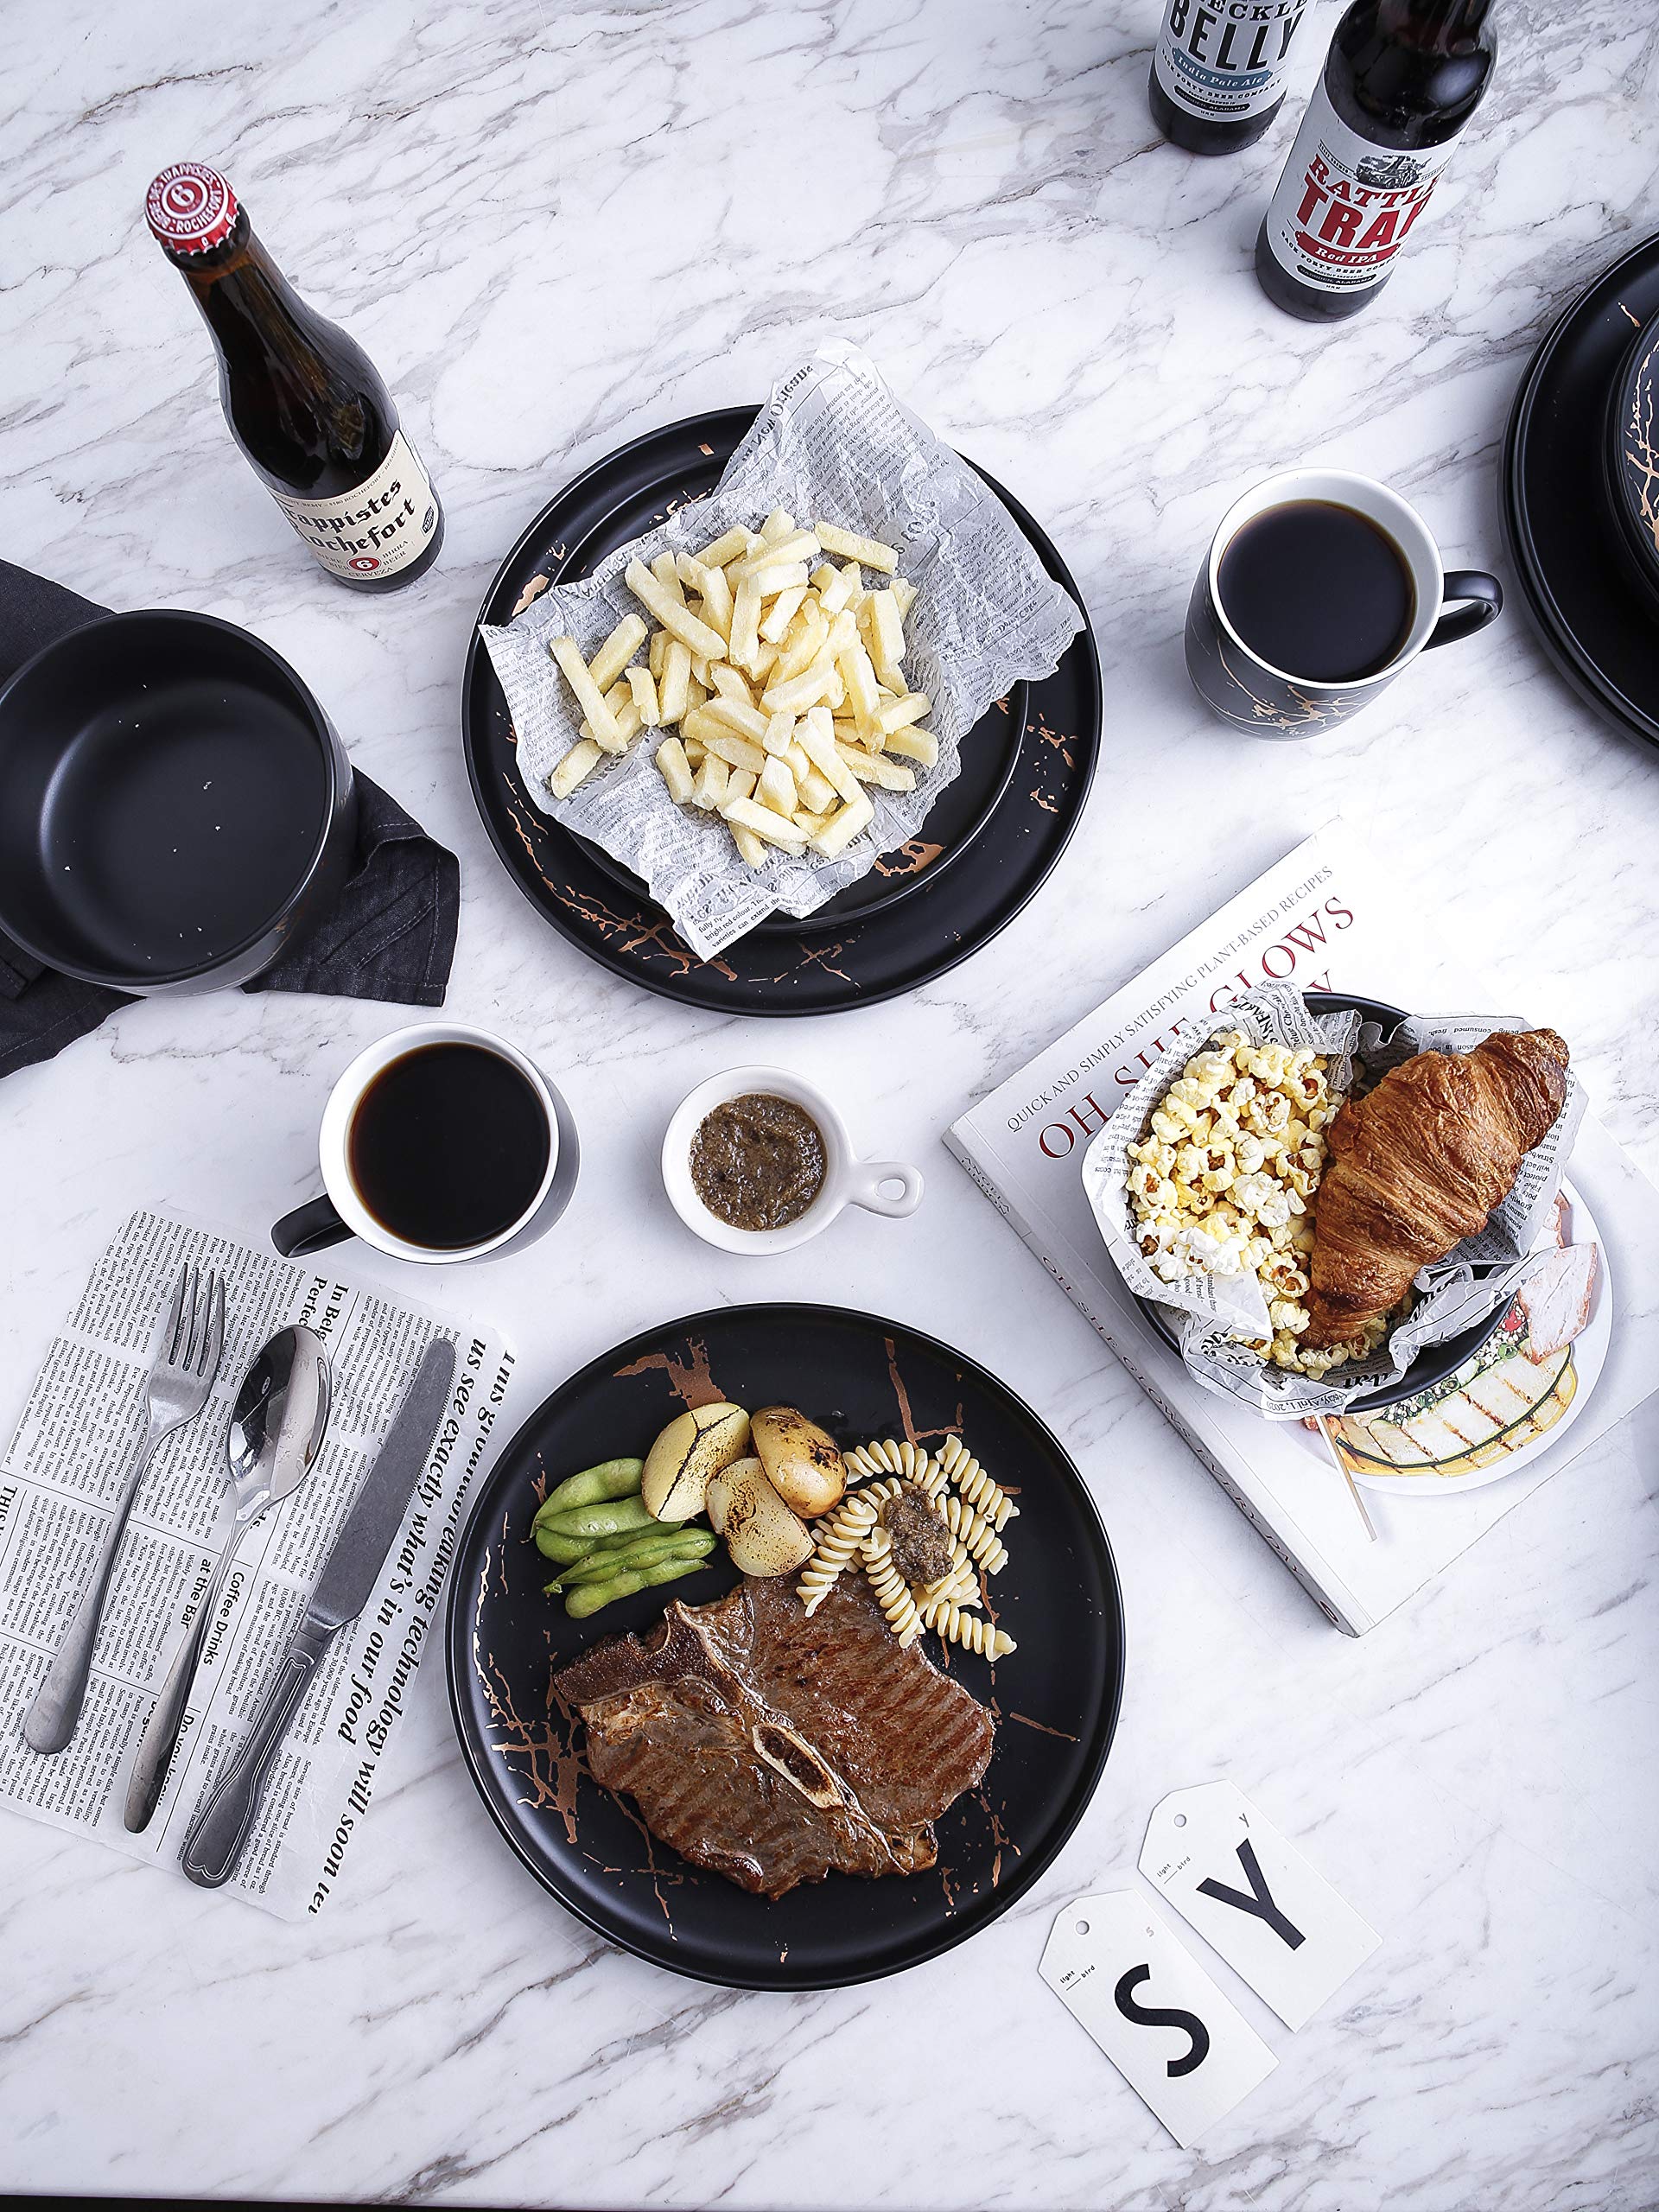 Stone Lain Modern Gold Splash Exquisite Fine China Dinnerware Set, 16 Piece - Service for 4, Black & Gold